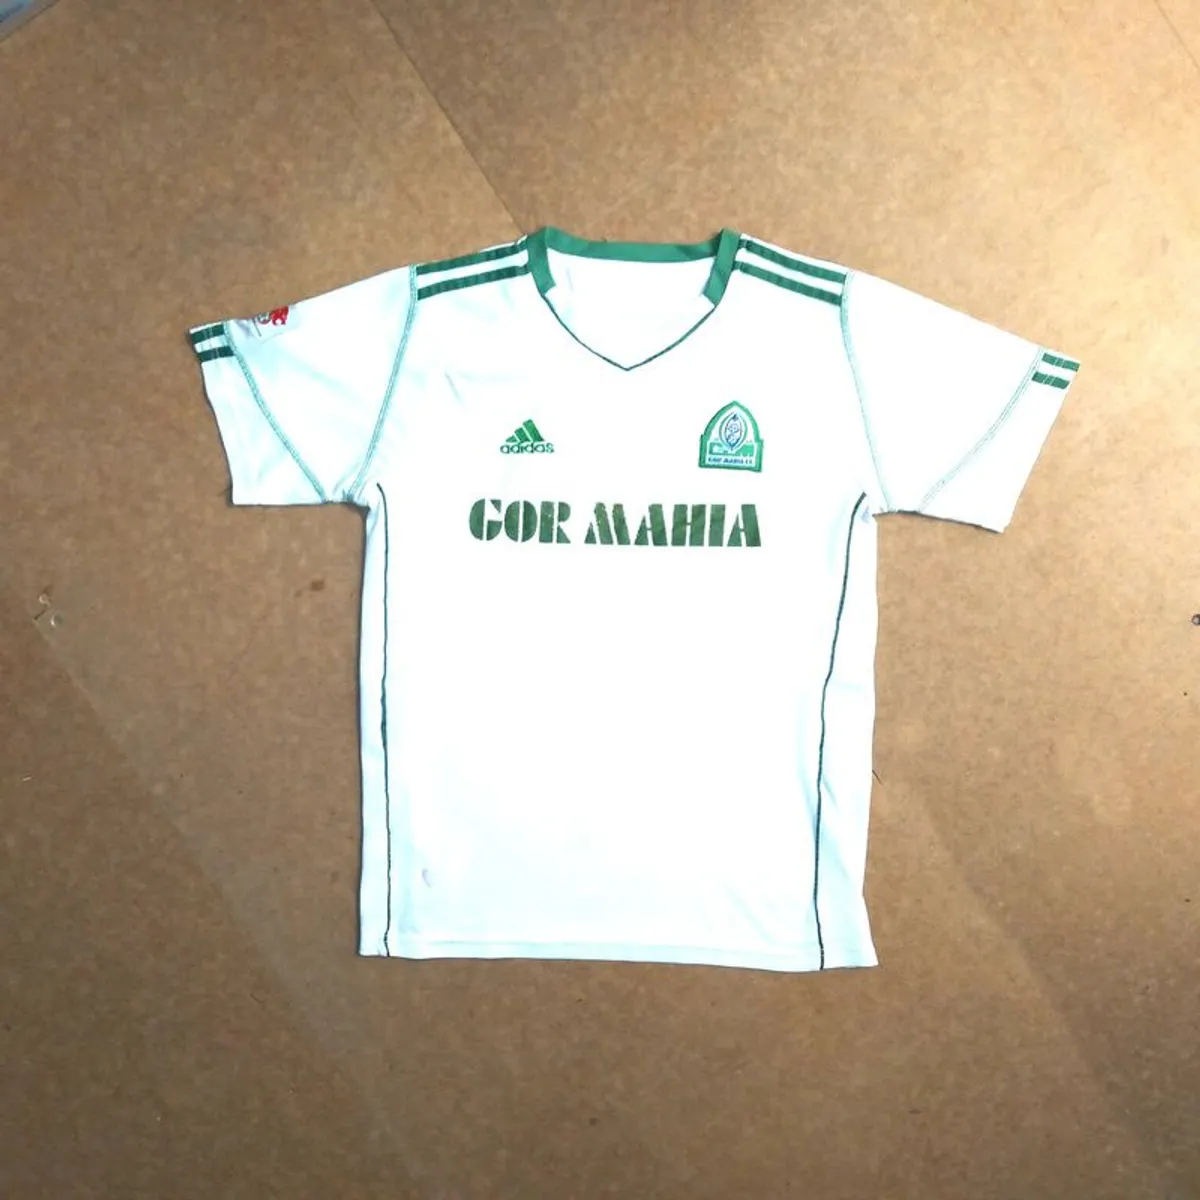 FREE POST Gor Mahia Kenya (S) Shirt Jersey Football Soccer Africa Small